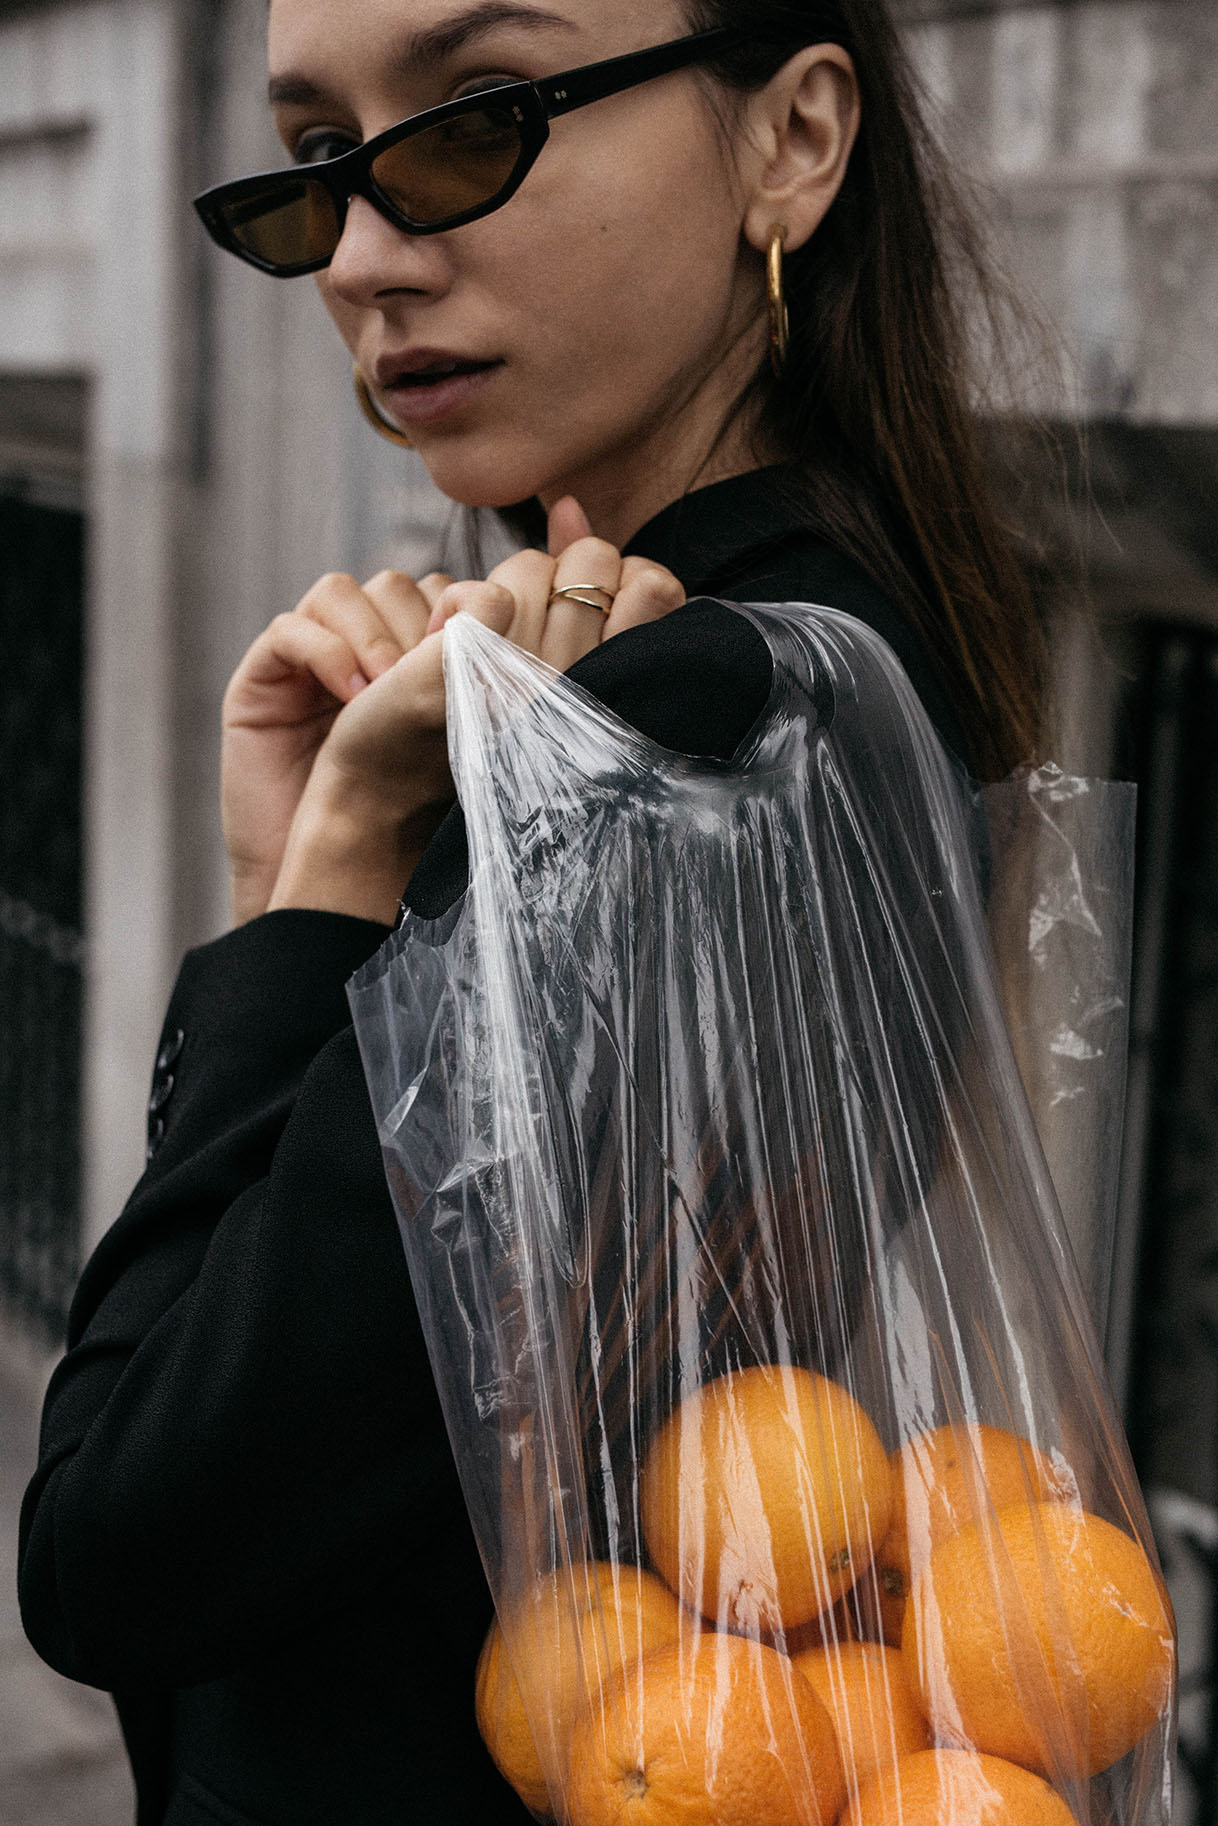 editorial-outfit-ideas-balenciaga-sunglasses-2018-dept43-black-tuxedo-dress-oranges-in-plastic-bag-photography-6